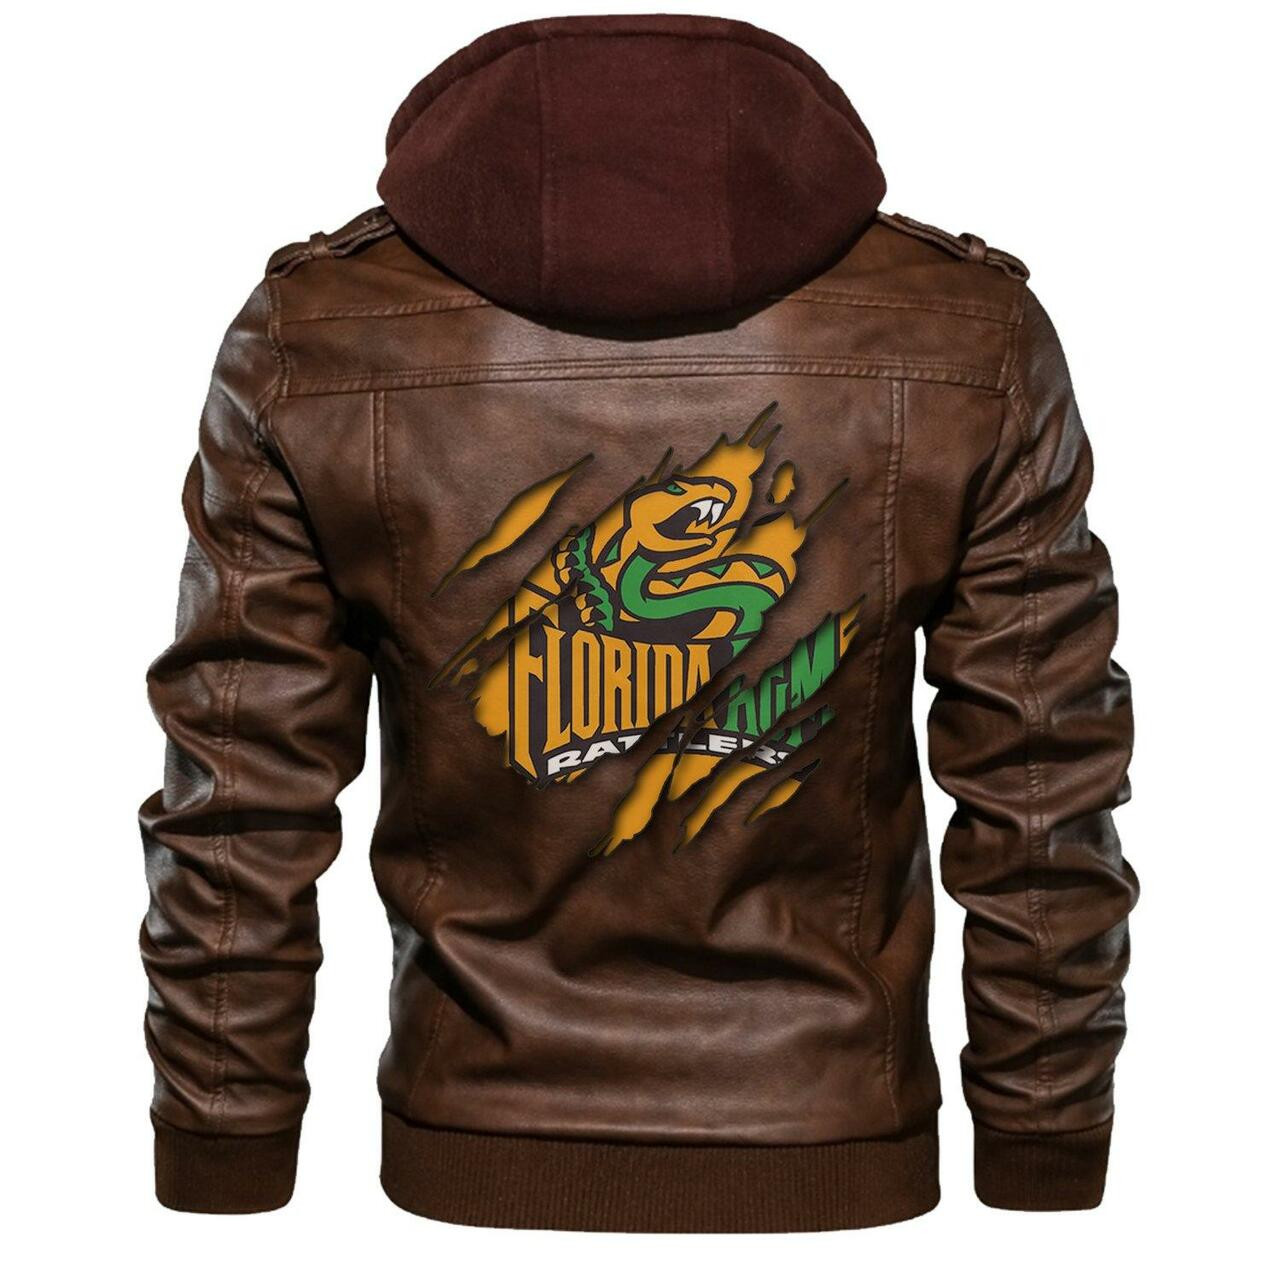 Top leather jacket Sells Best on Techcomshop 32